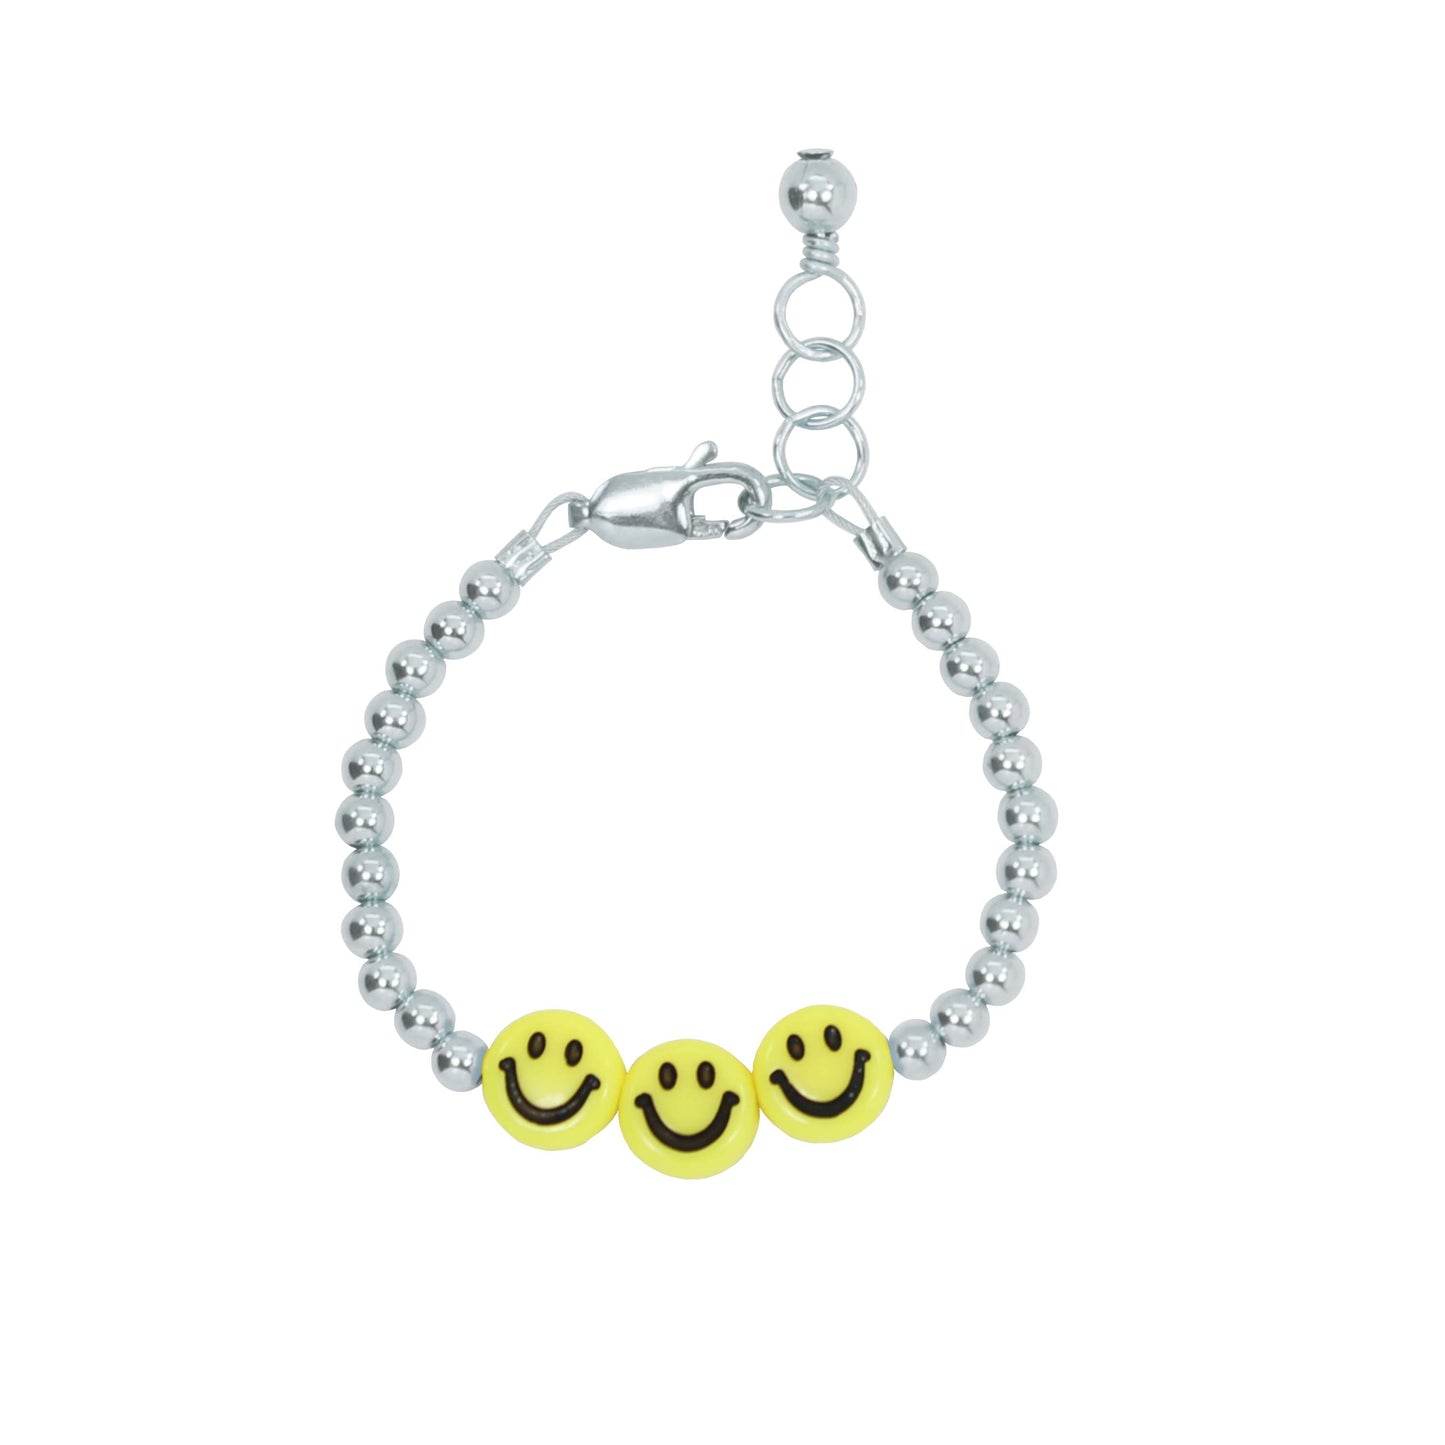 Lisa Gozlan Jewelry on Instagram: “BR030 8” — tap to shop men's happy face  bracelets 🤩” | Jewelry sales, Jewelry show, Jewelry lover